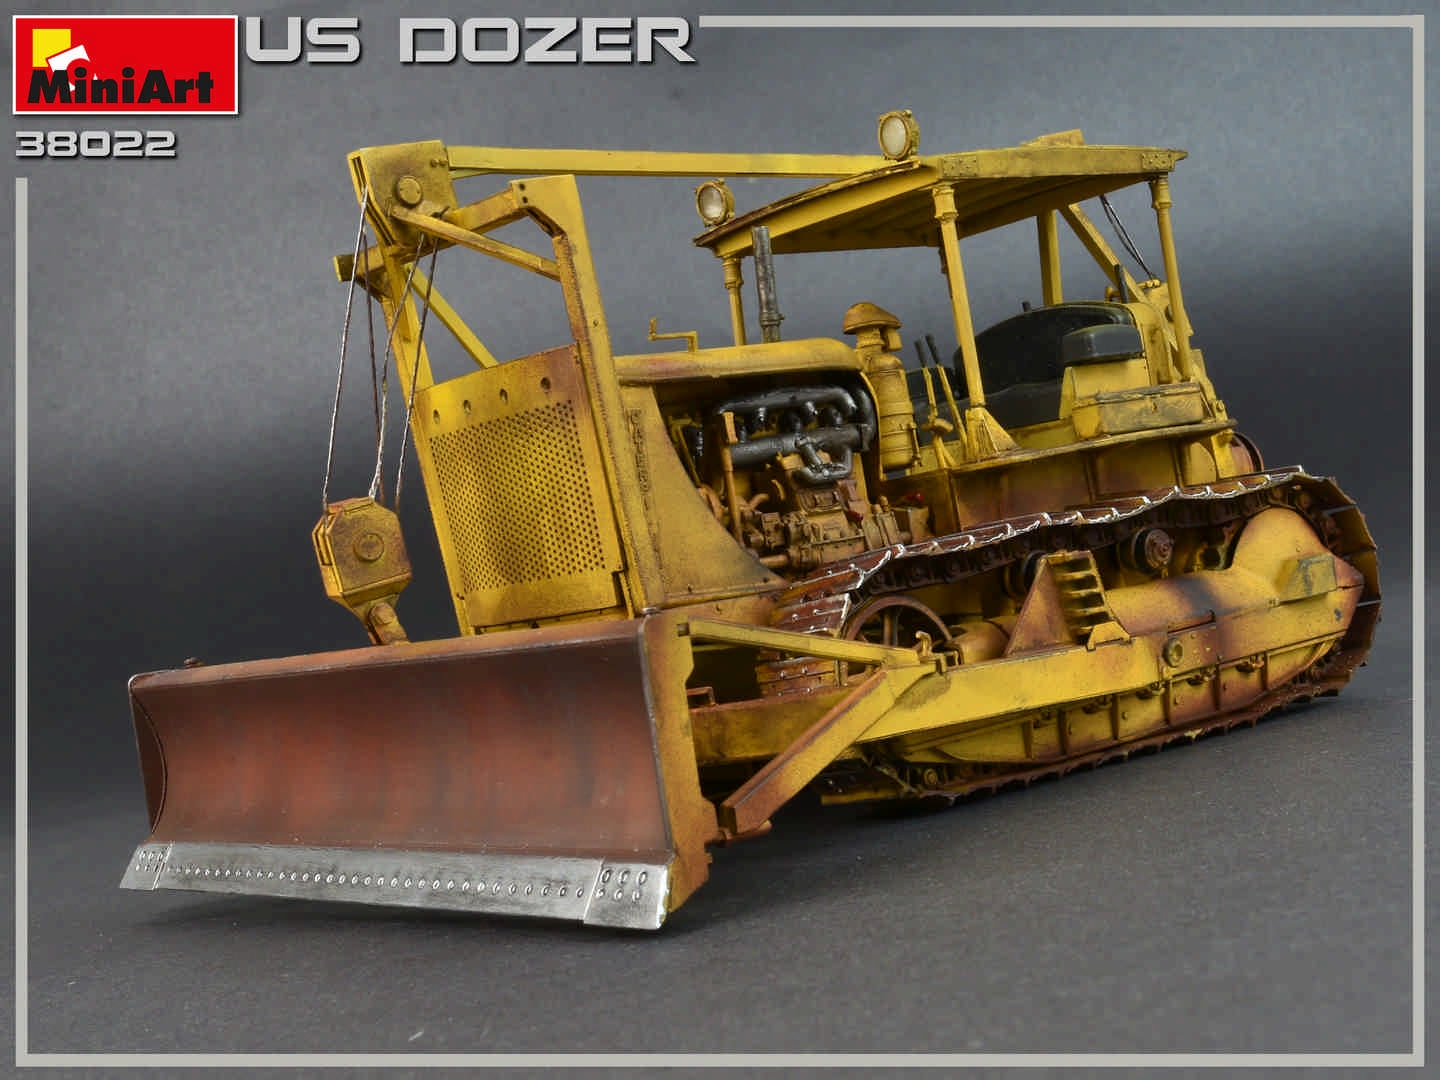 Miniart 1/35 US Bulldozer # 38022